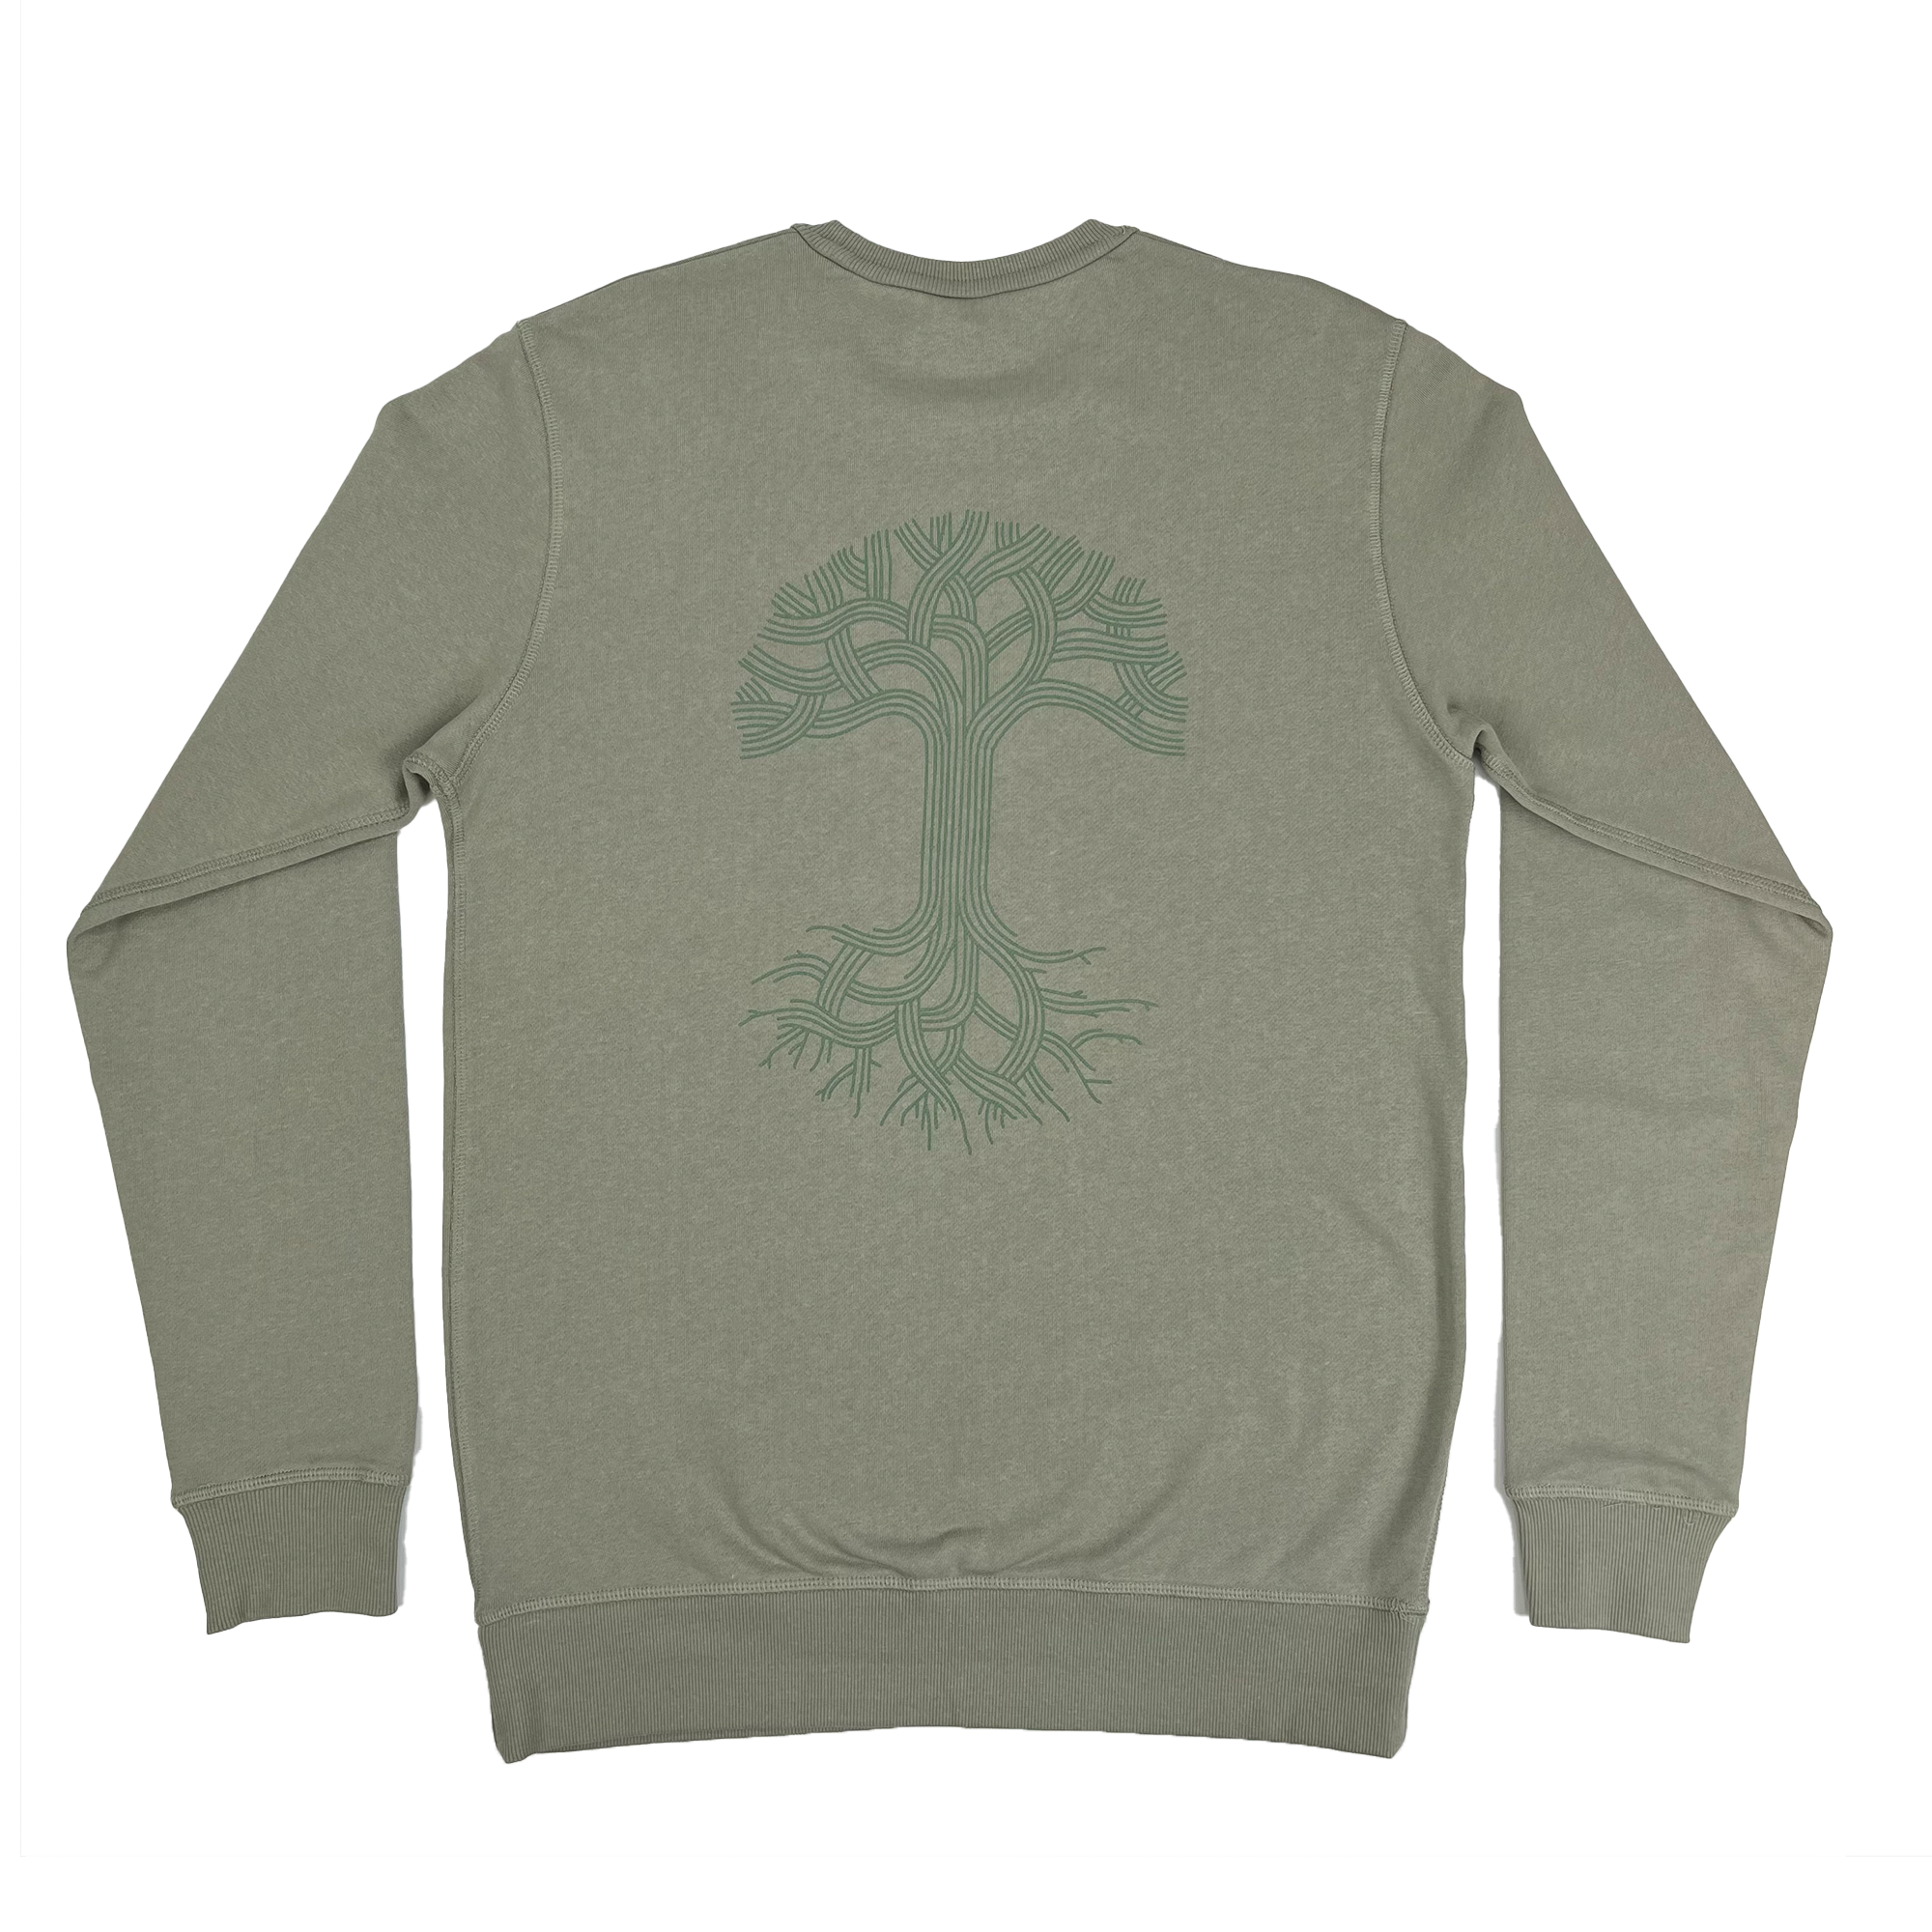 Back view of Premium crewneck sweatshirt - Oaklandish tree logo, eucalyptus.